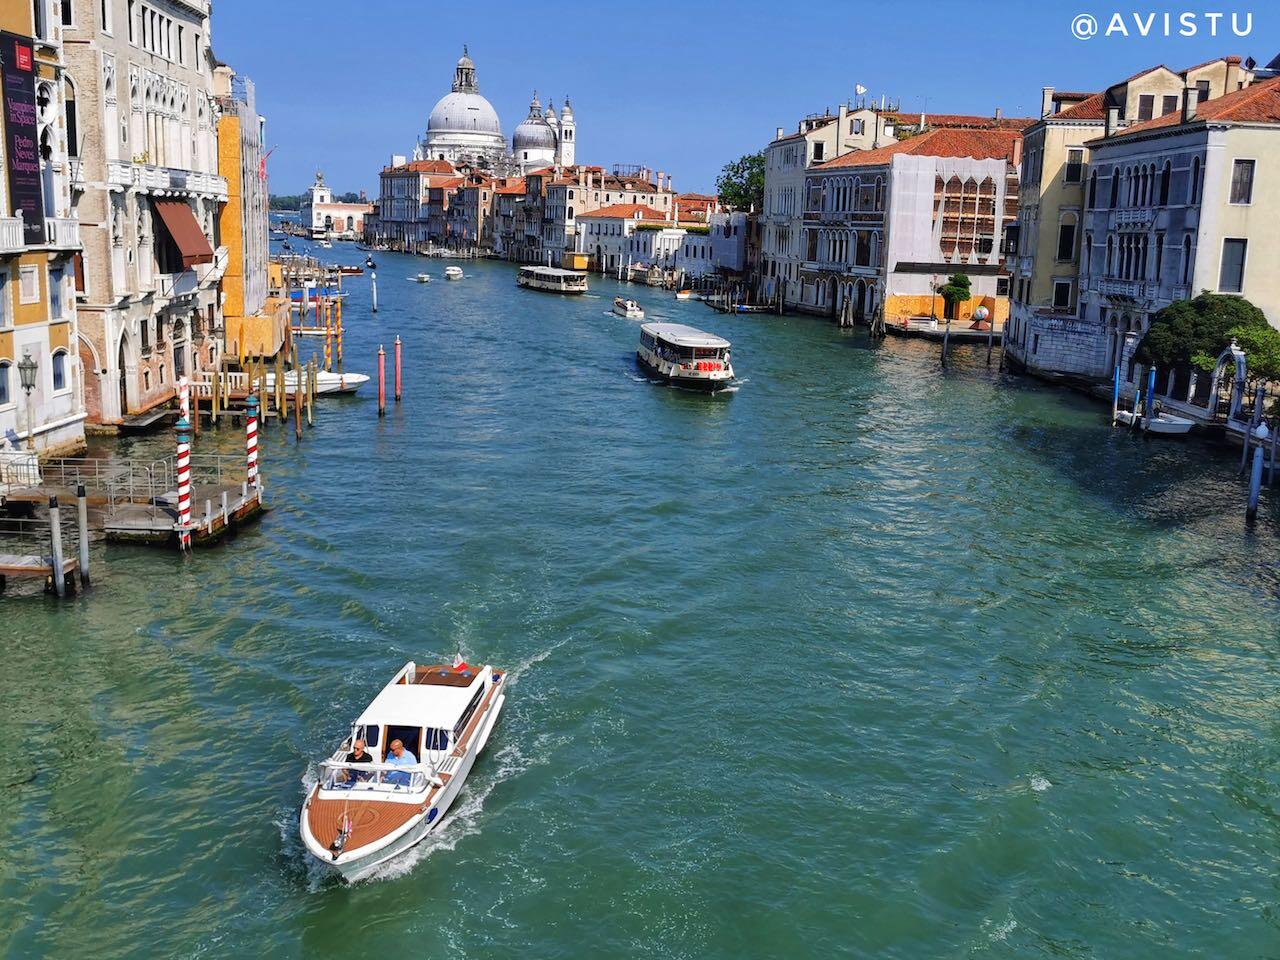 Vaporetti y otros barcos en el Gran Canal de Venecia [(c) Foto: @avistu]